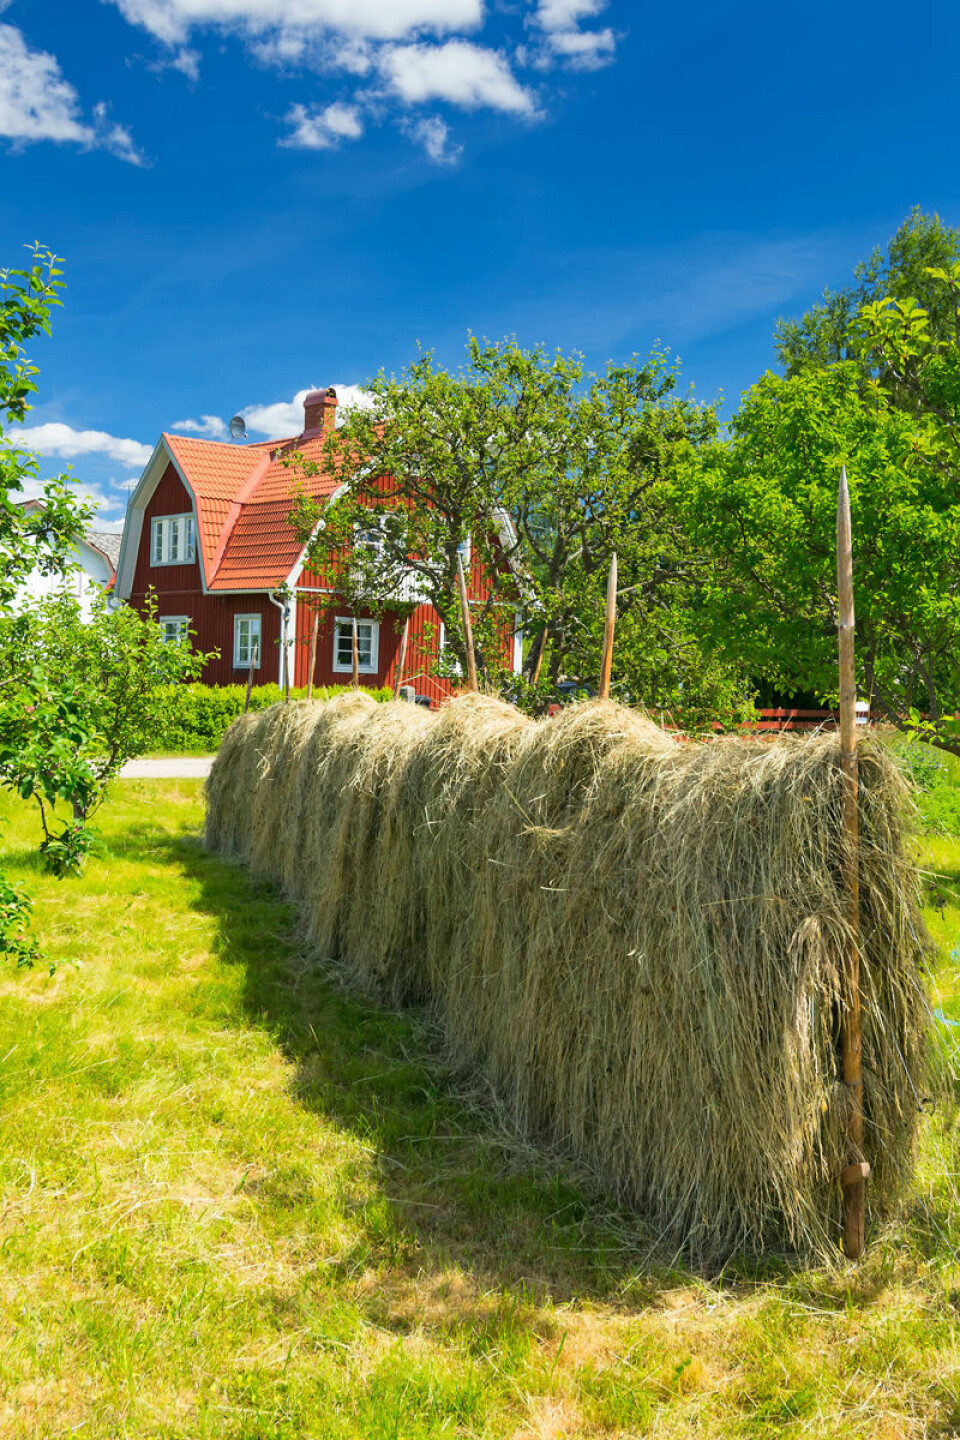 Minnene om været på 1960-tallet bidrar til at svenske bønder ikke vil være med på at klimaet er i  noen varig endring. (Foto: Microstock)